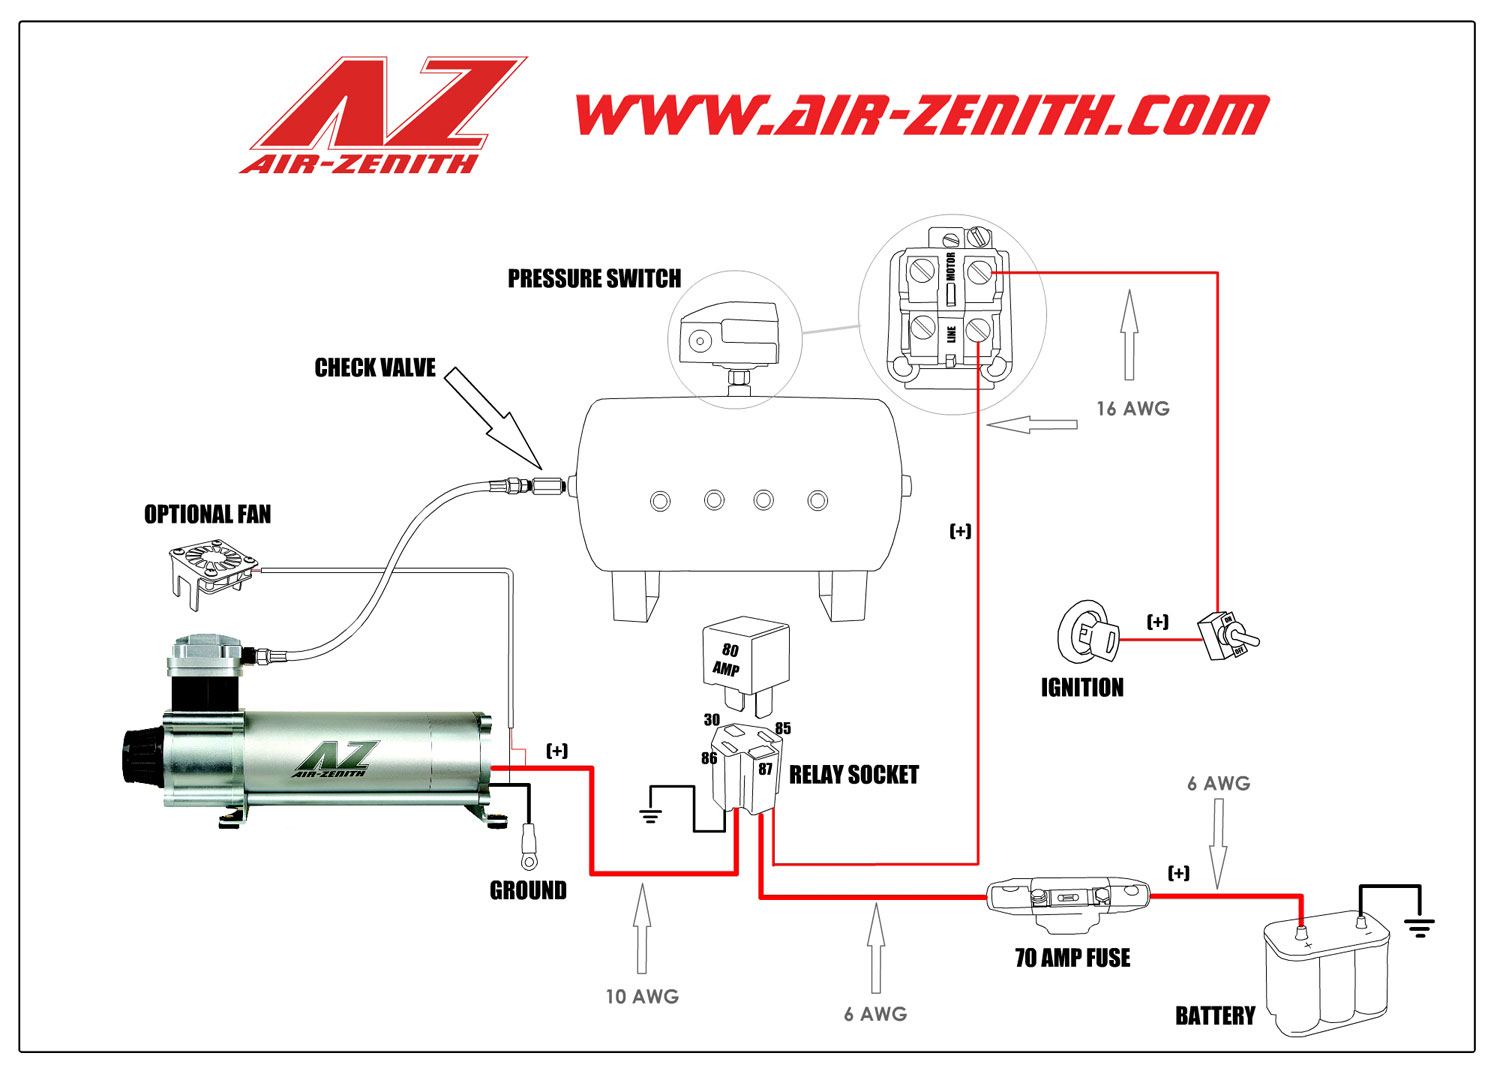 Portable Air Compressor Pressure Switch Wiring Diagram | Manual E-Books - Air Compressor Pressure Switch Wiring Diagram